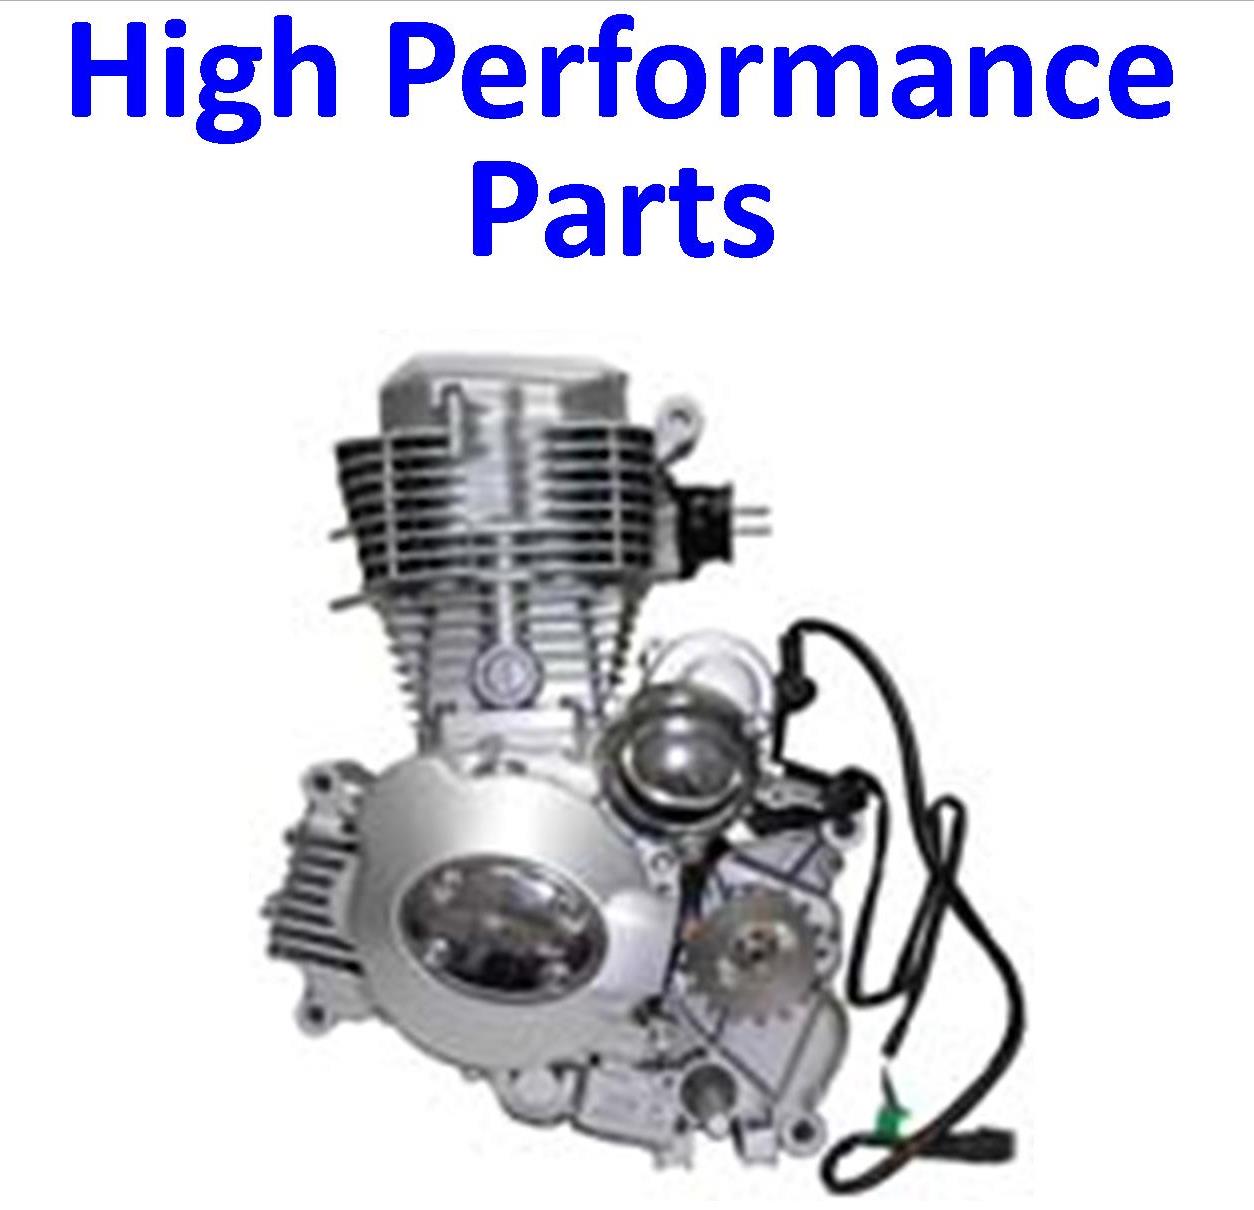 High Performance Parts 125cc-250cc CG Type Engines